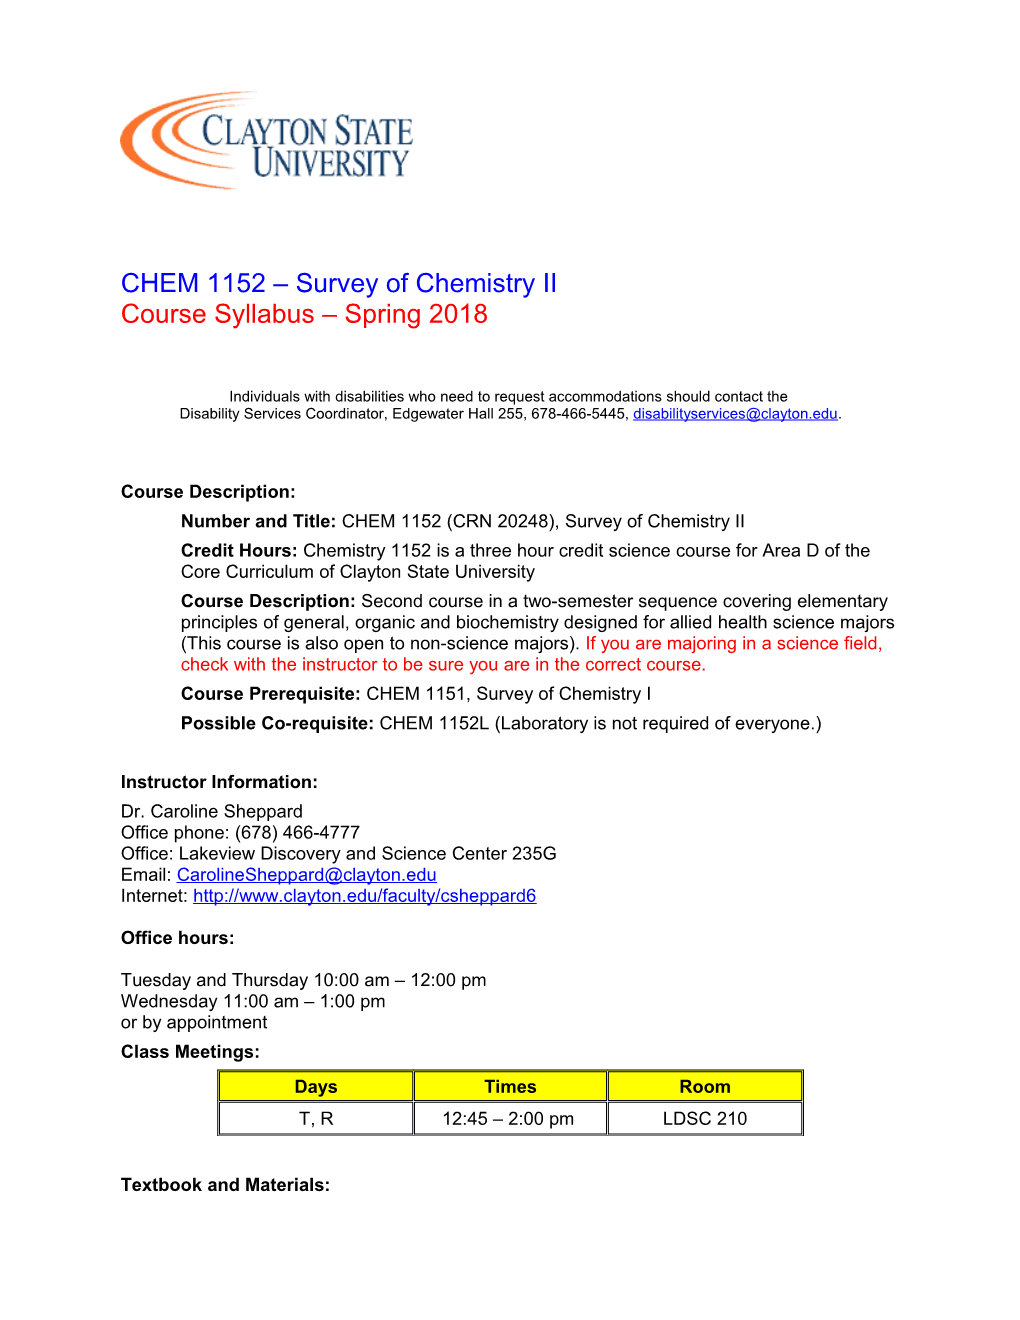 CHEM 1152 Survey of Chemistry II Course Syllabus Spring 2018